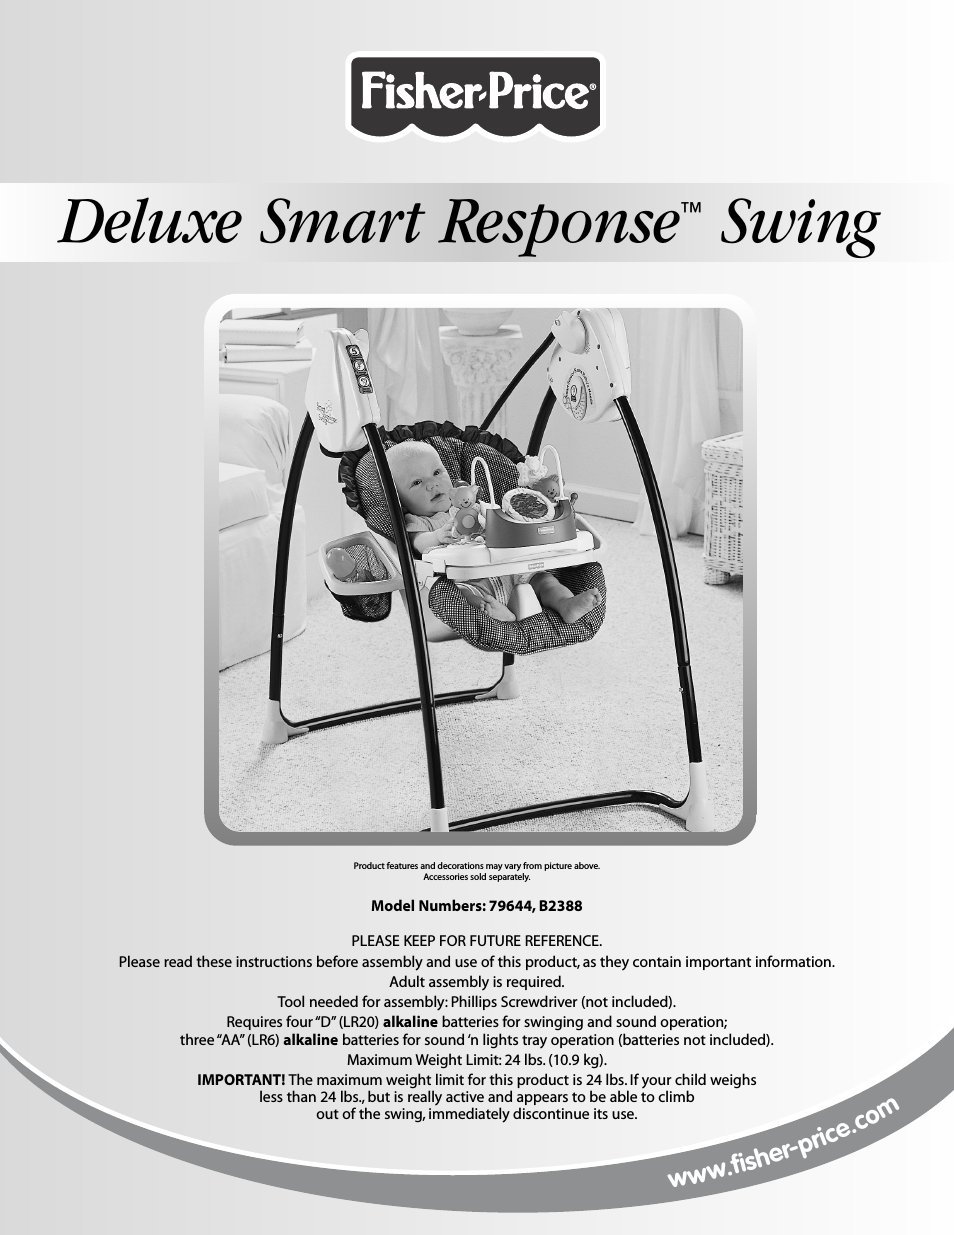 DELUXE SMART RESPONSE B2388